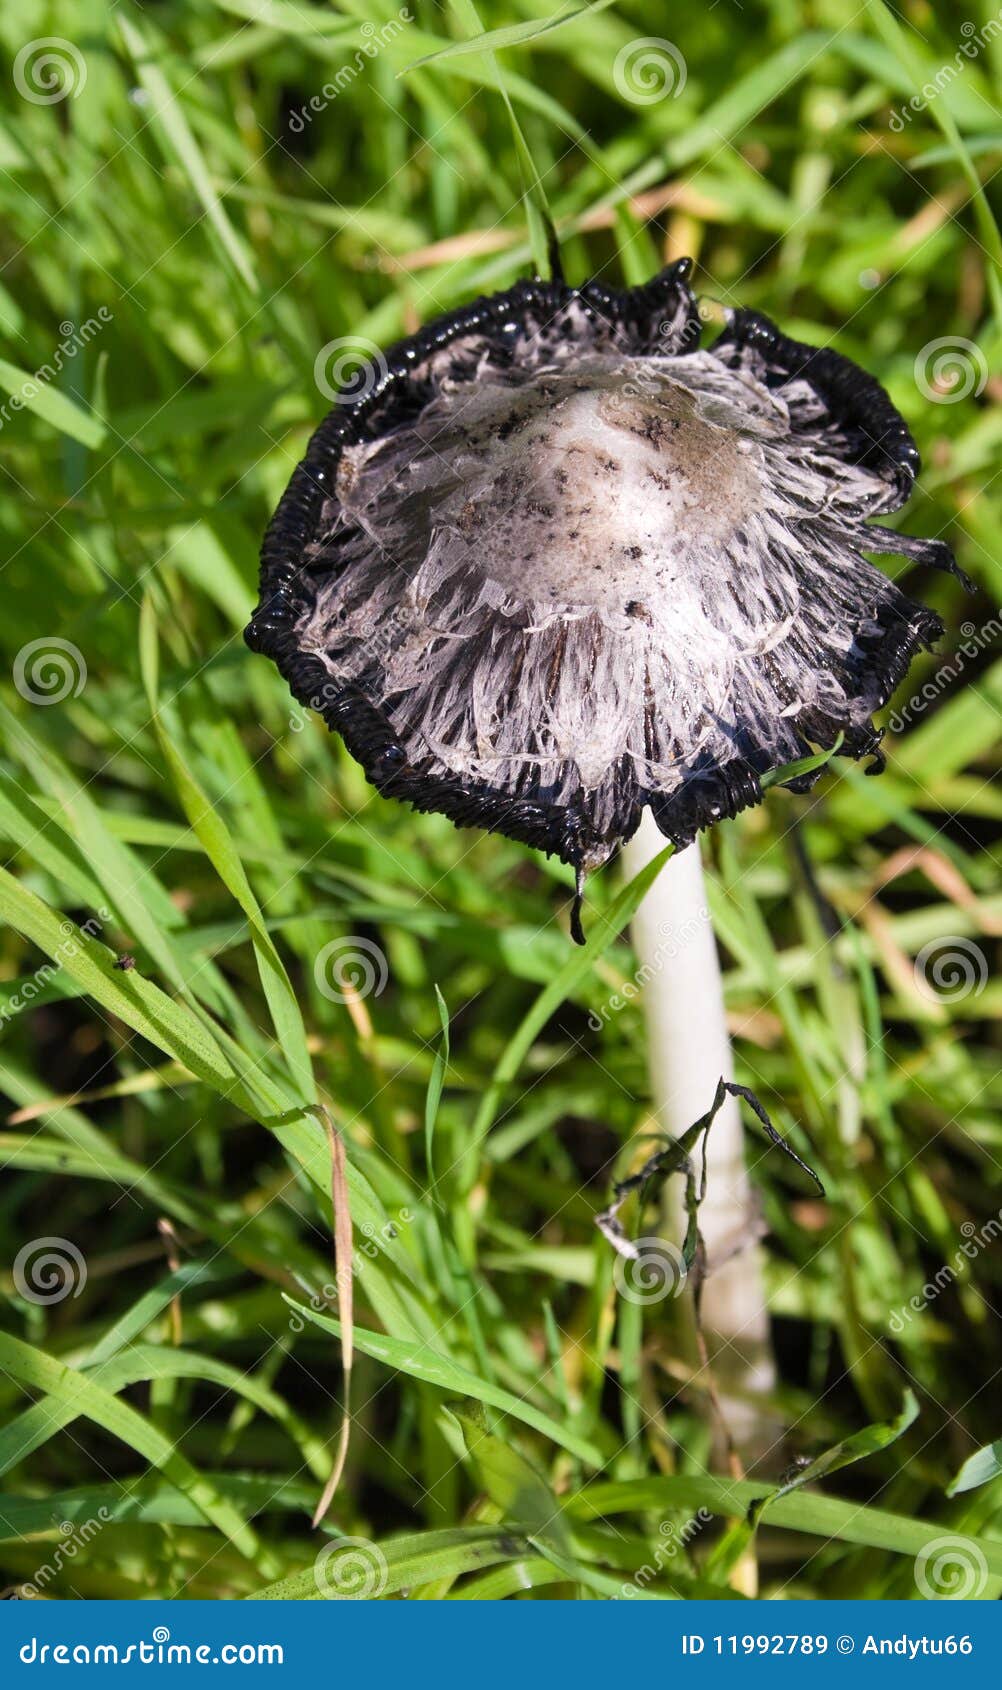 big hallucinogen mushroom